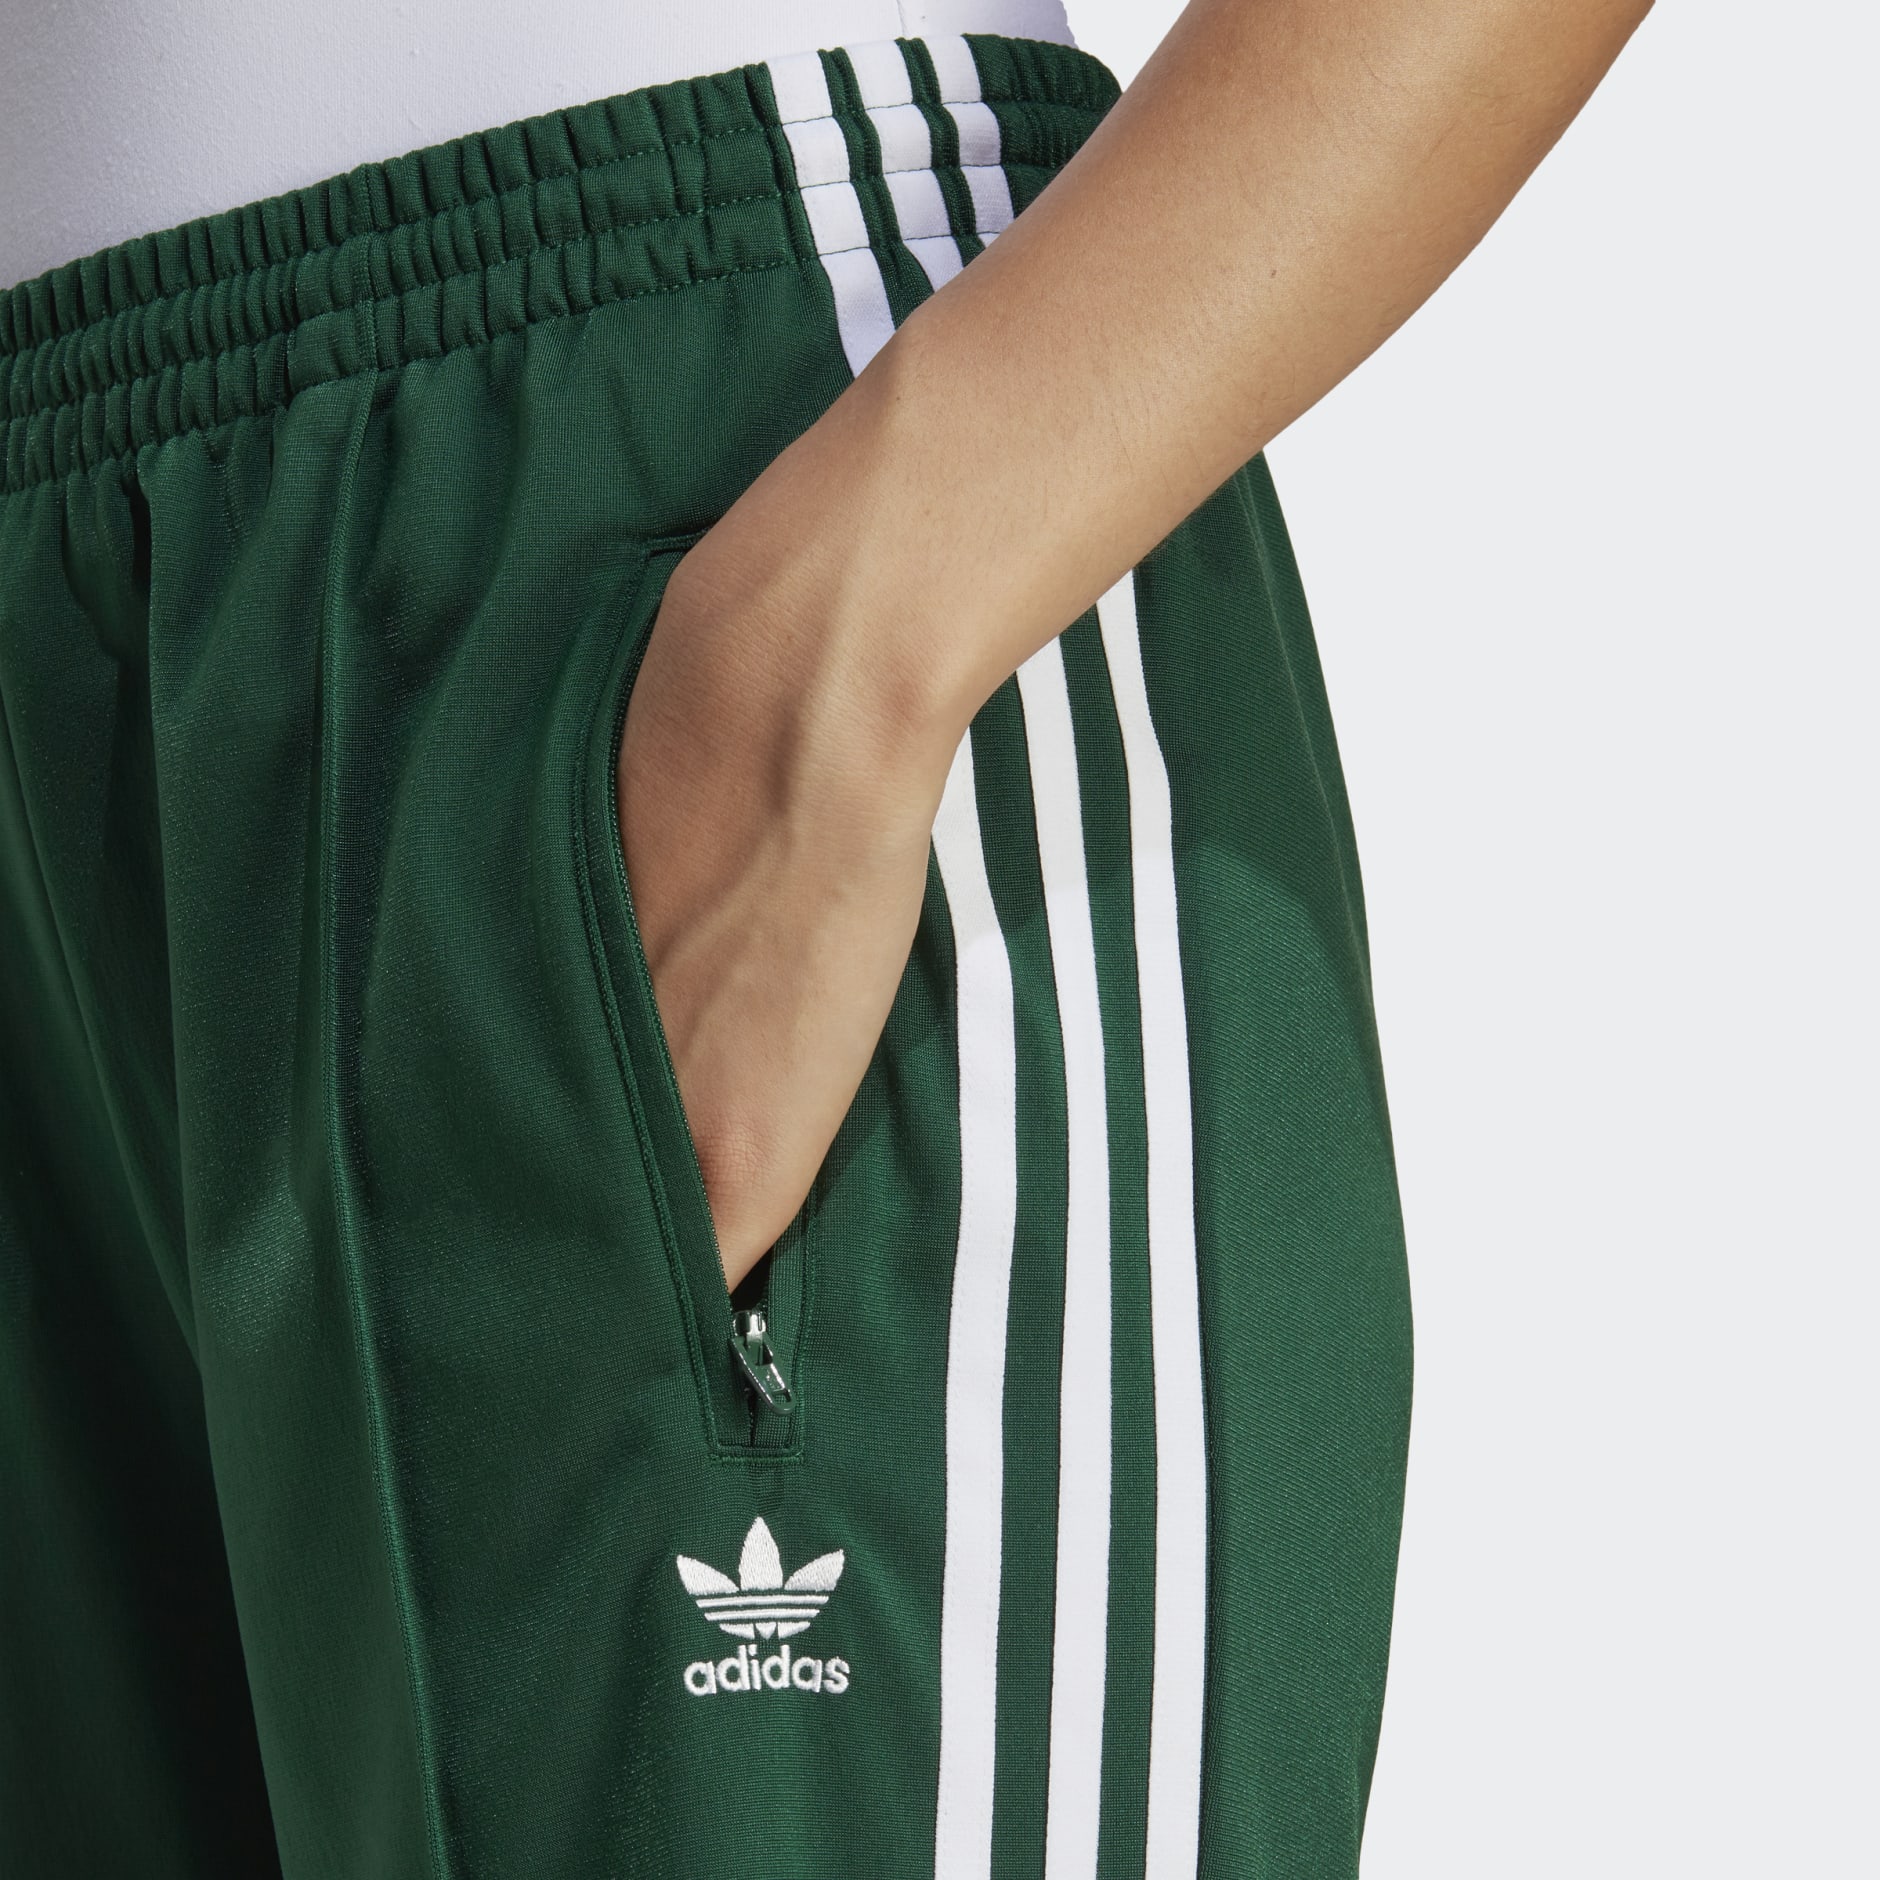 adidas Originals SST track pants in collegiate green